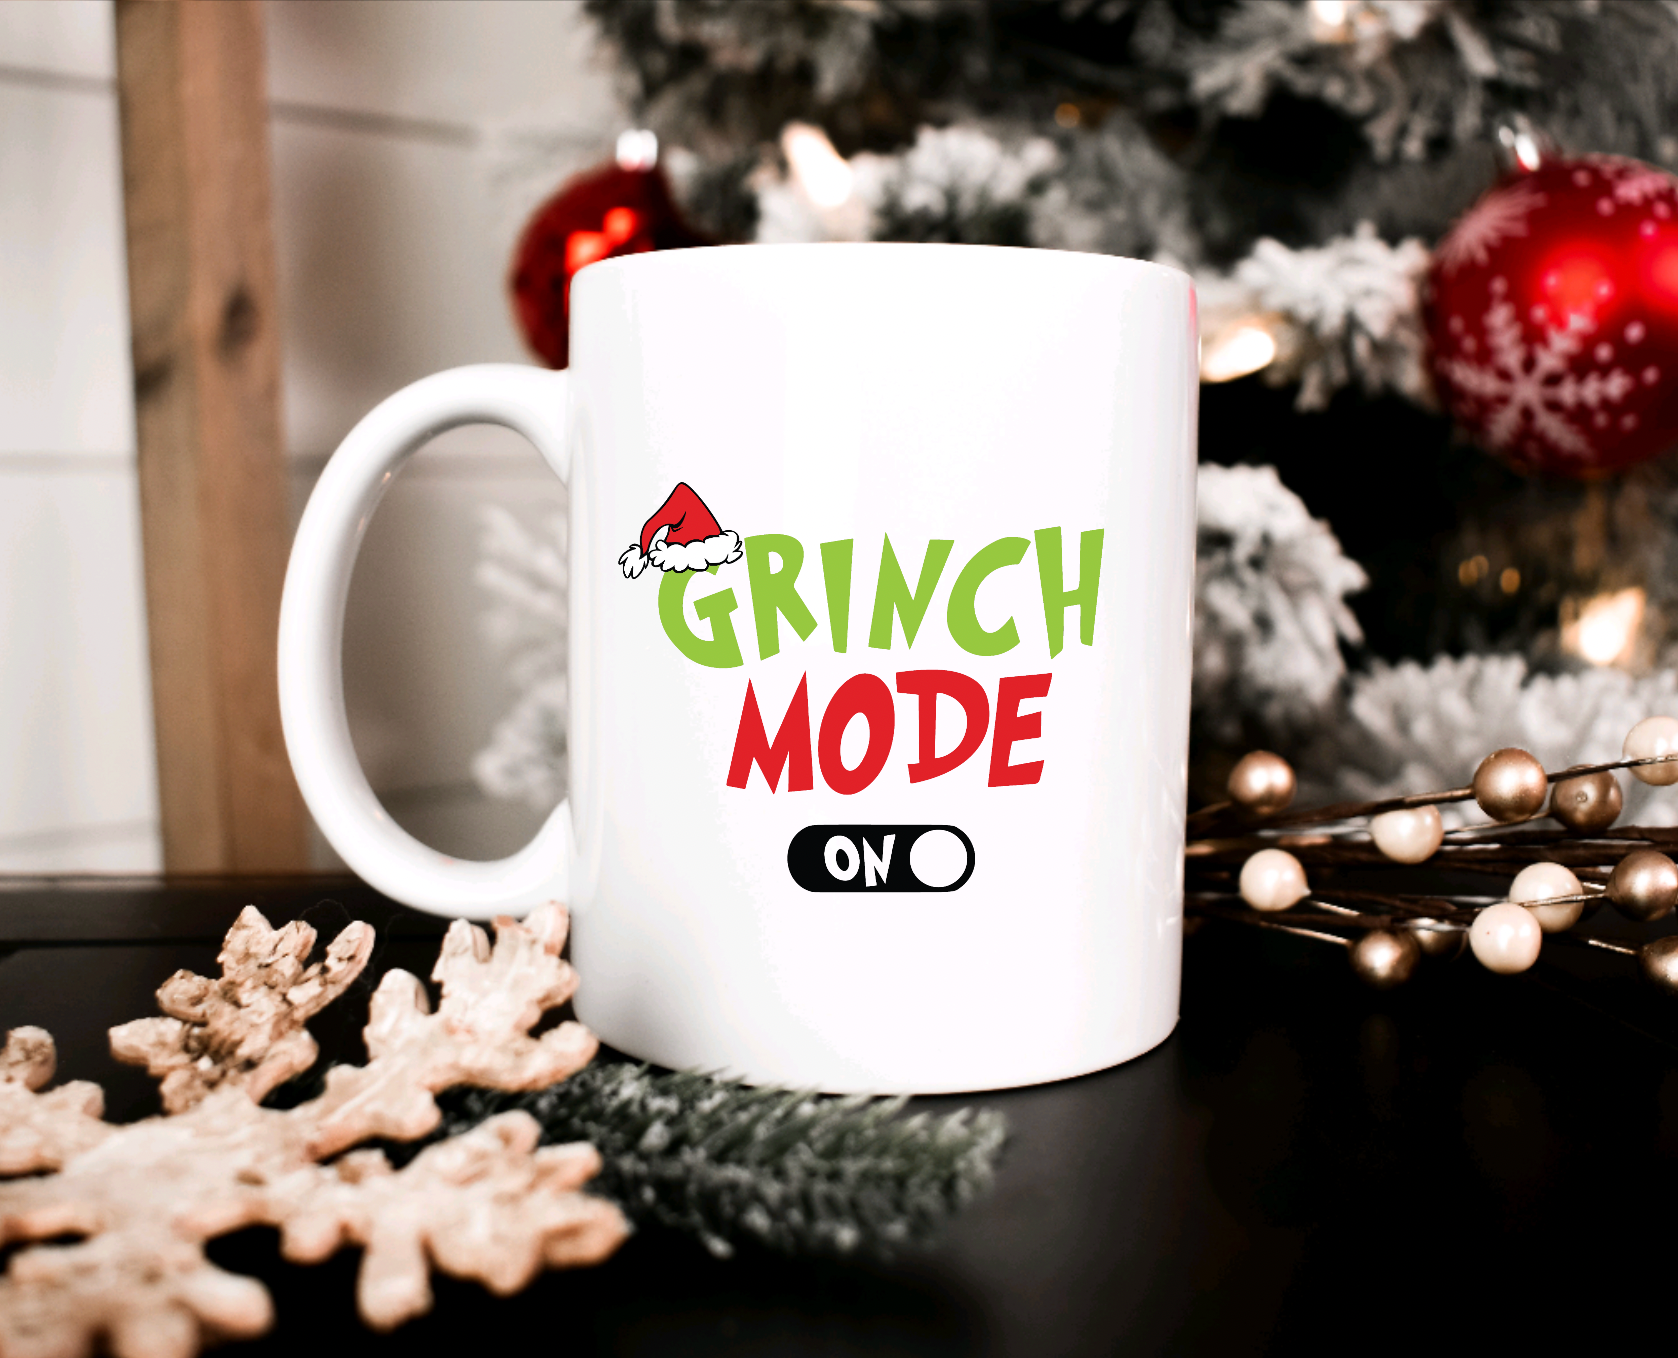 G mode: On mug